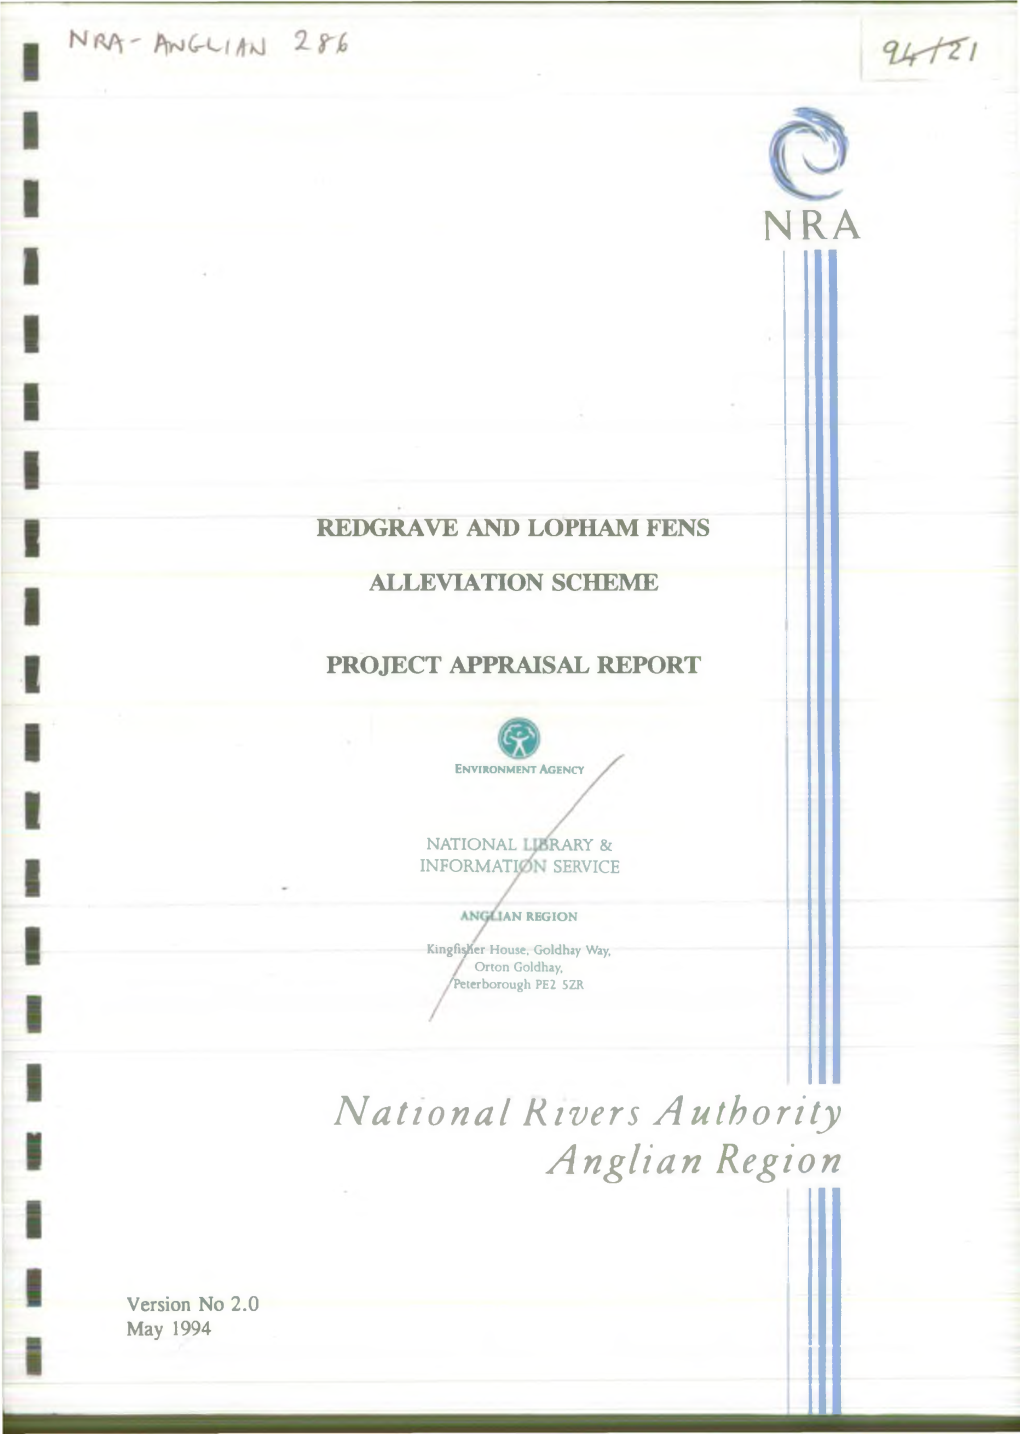 NRA National Rivers Authority Anglian Region